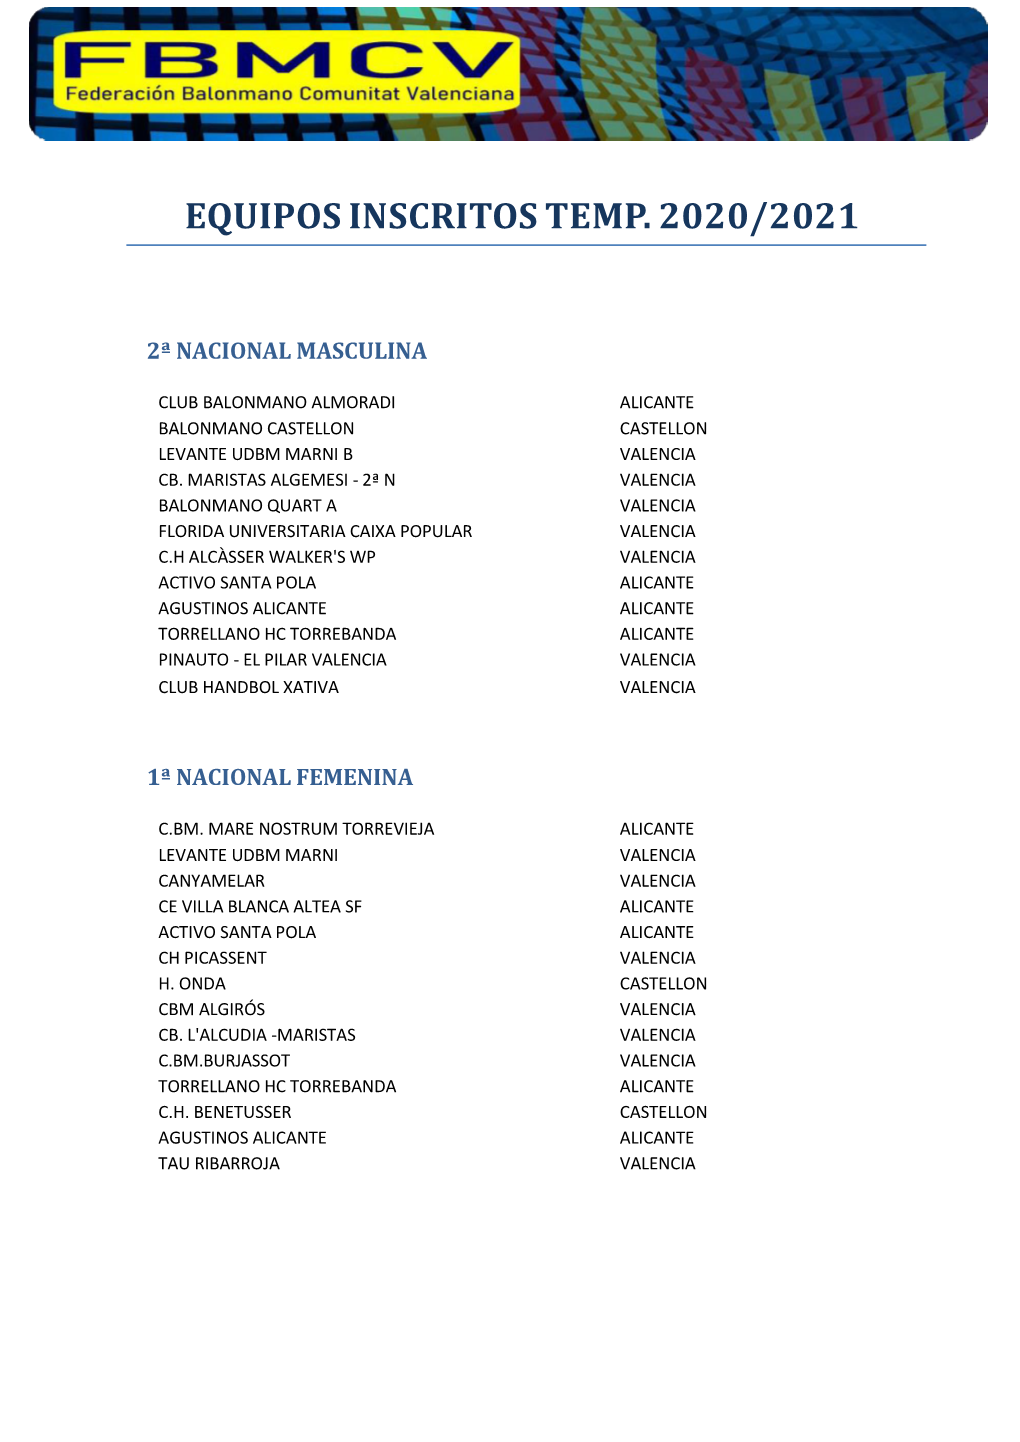 Equipos Inscritos Temp. 2020/2021